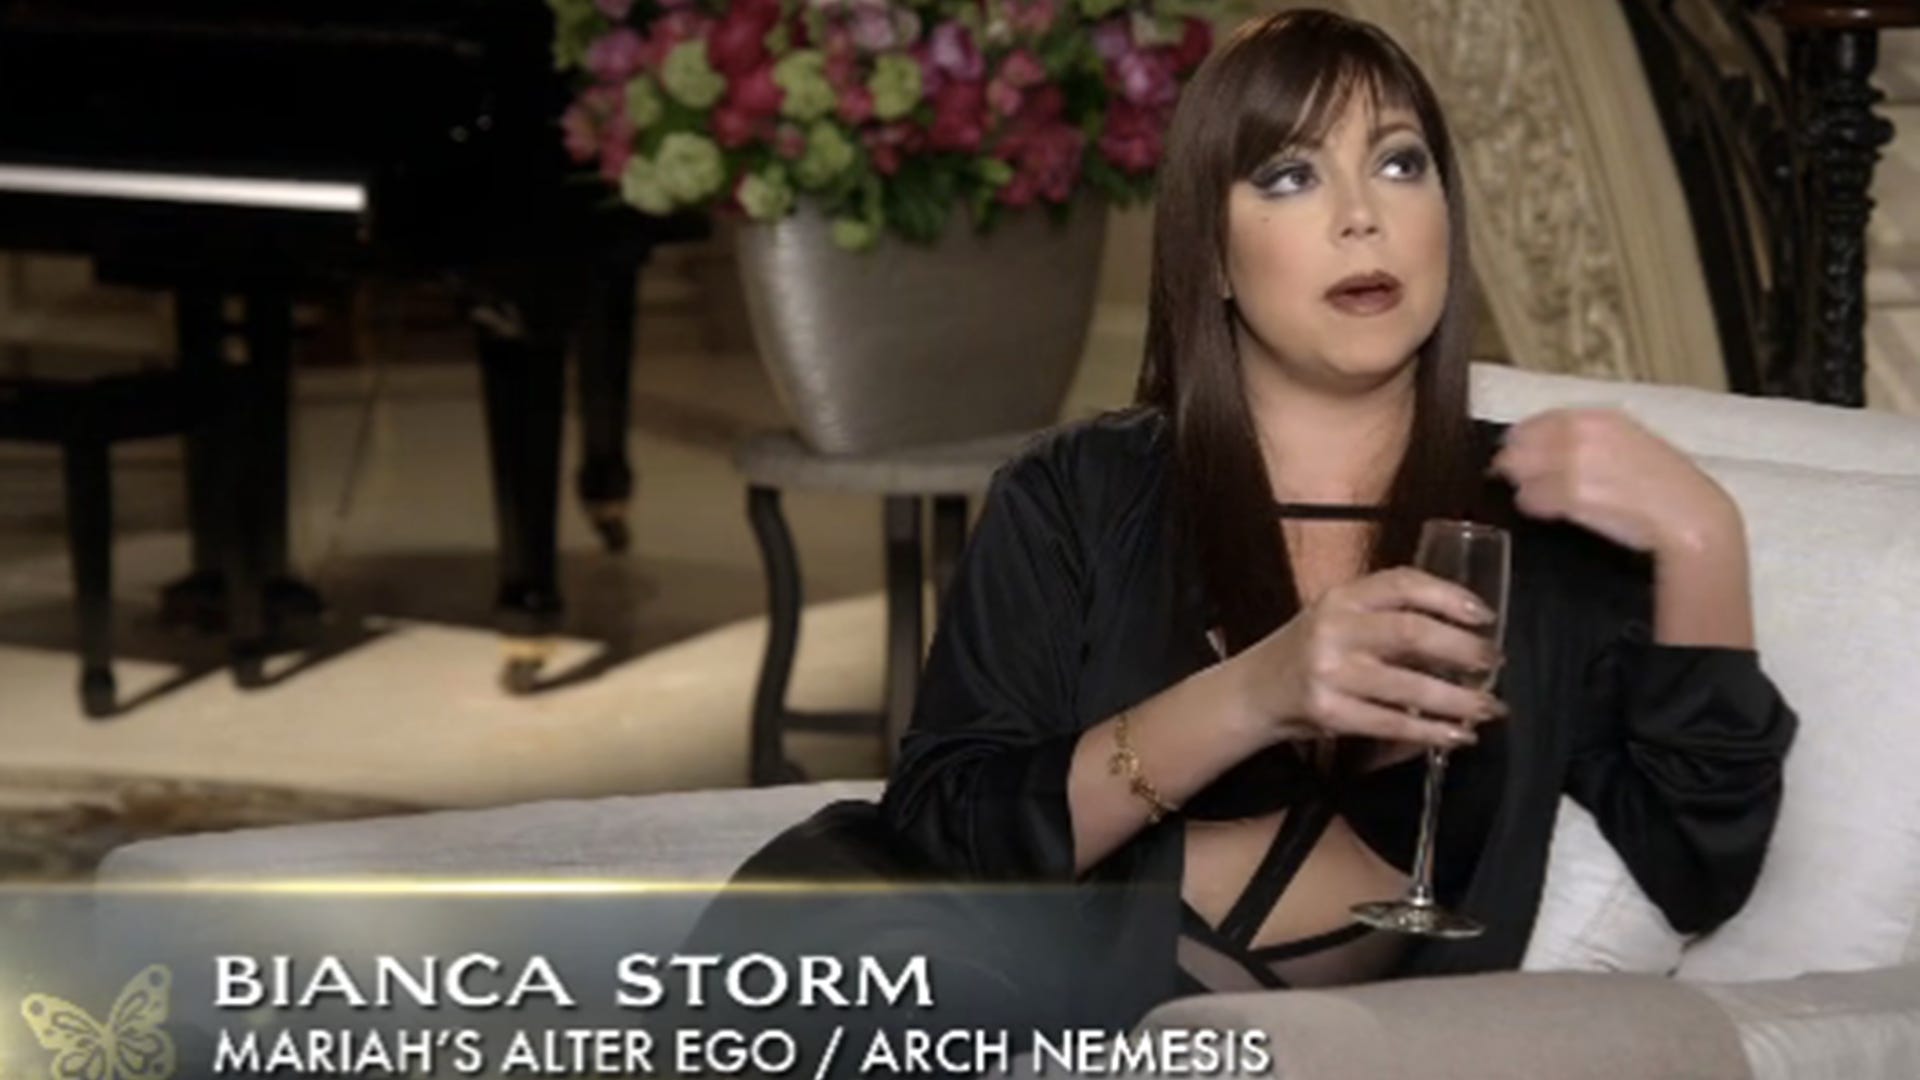 Mariah as Bianca Storm